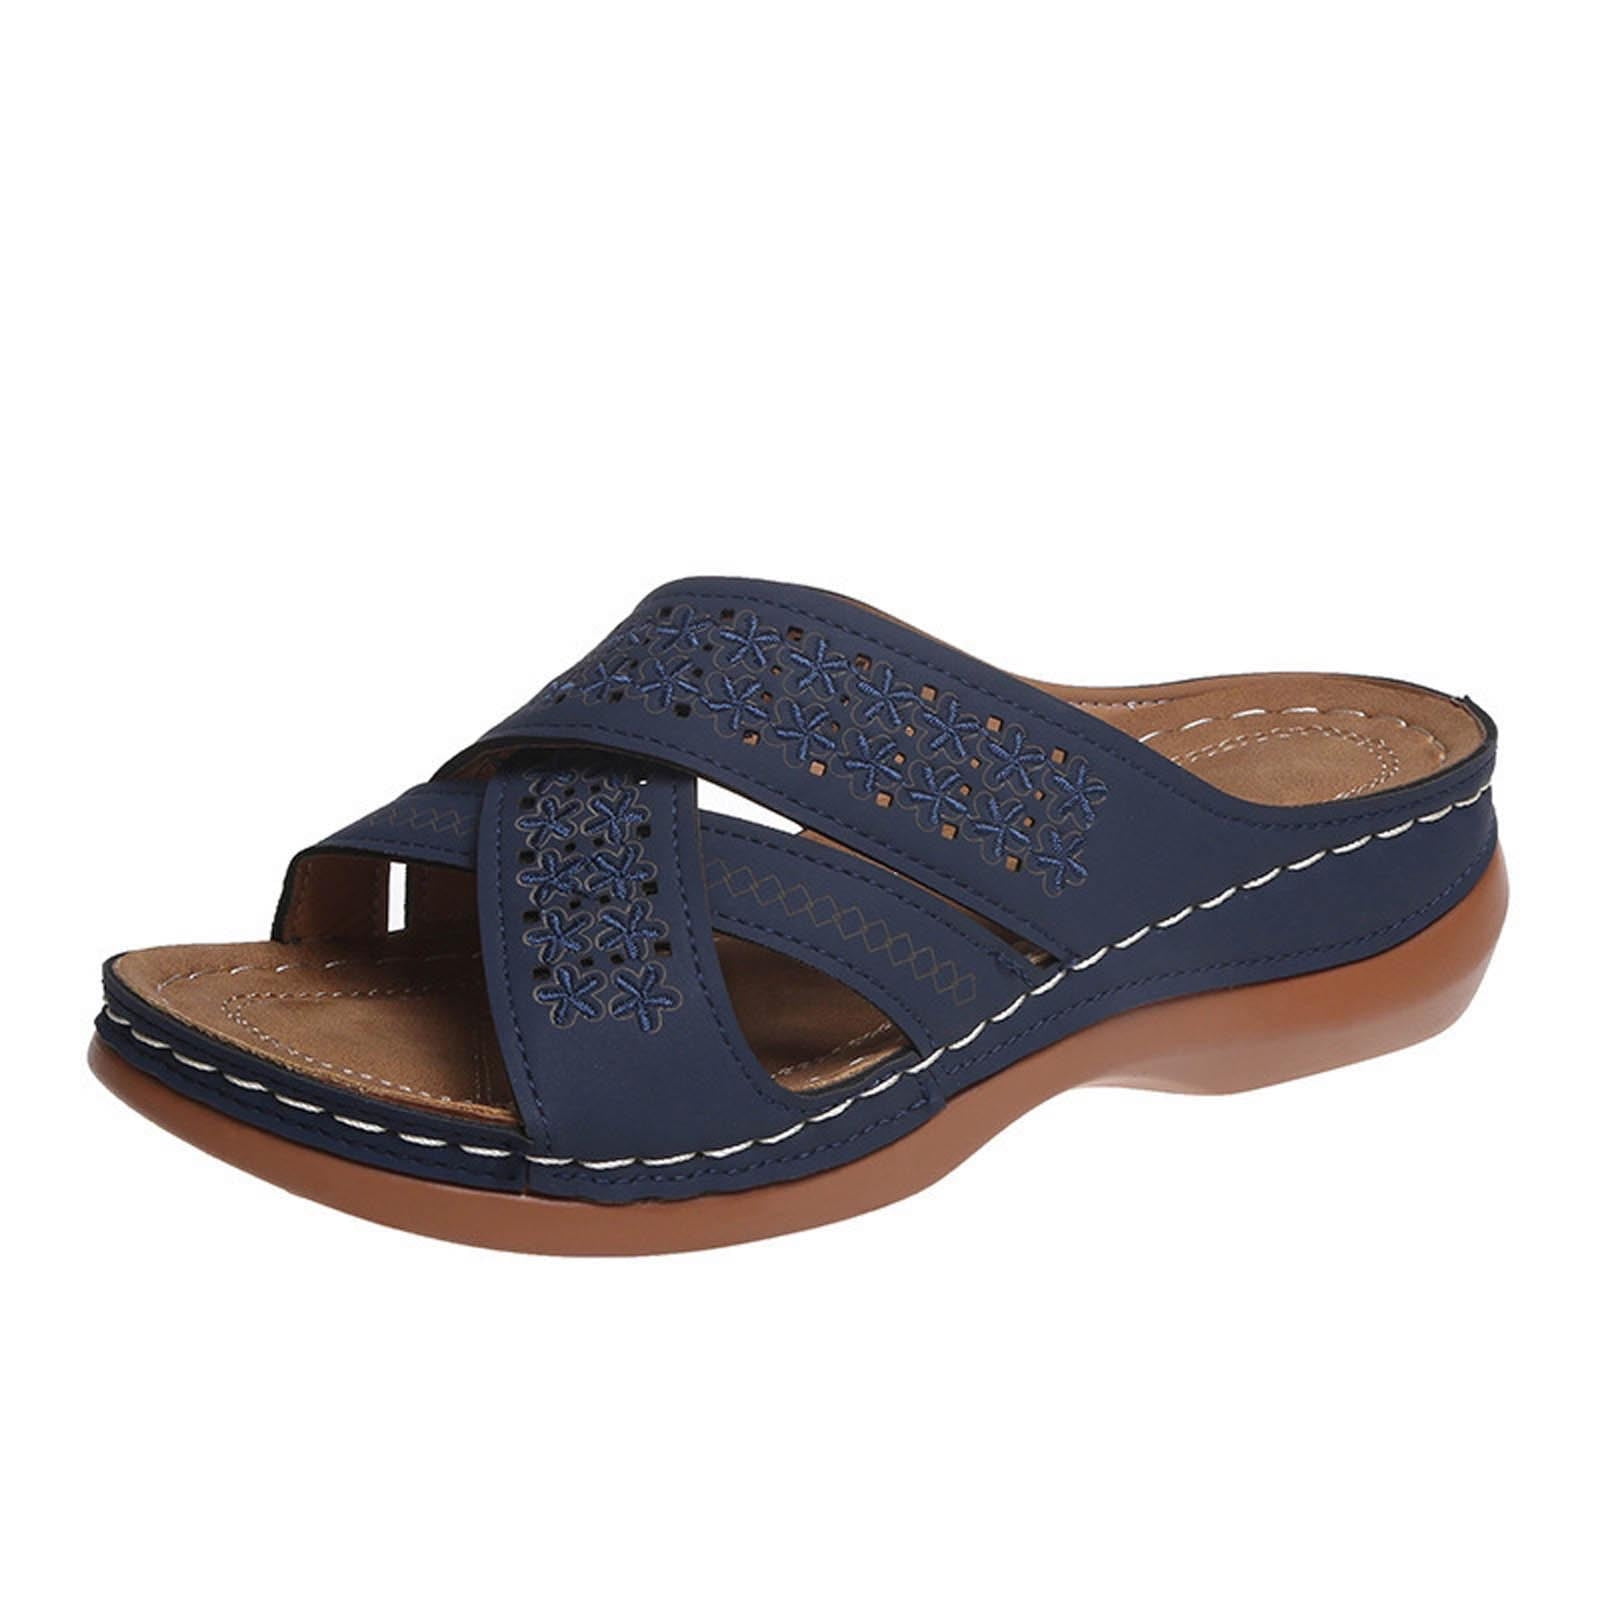 Leather Slipper Summer Womens Slide Sandals Open Toe Leather Flat ...